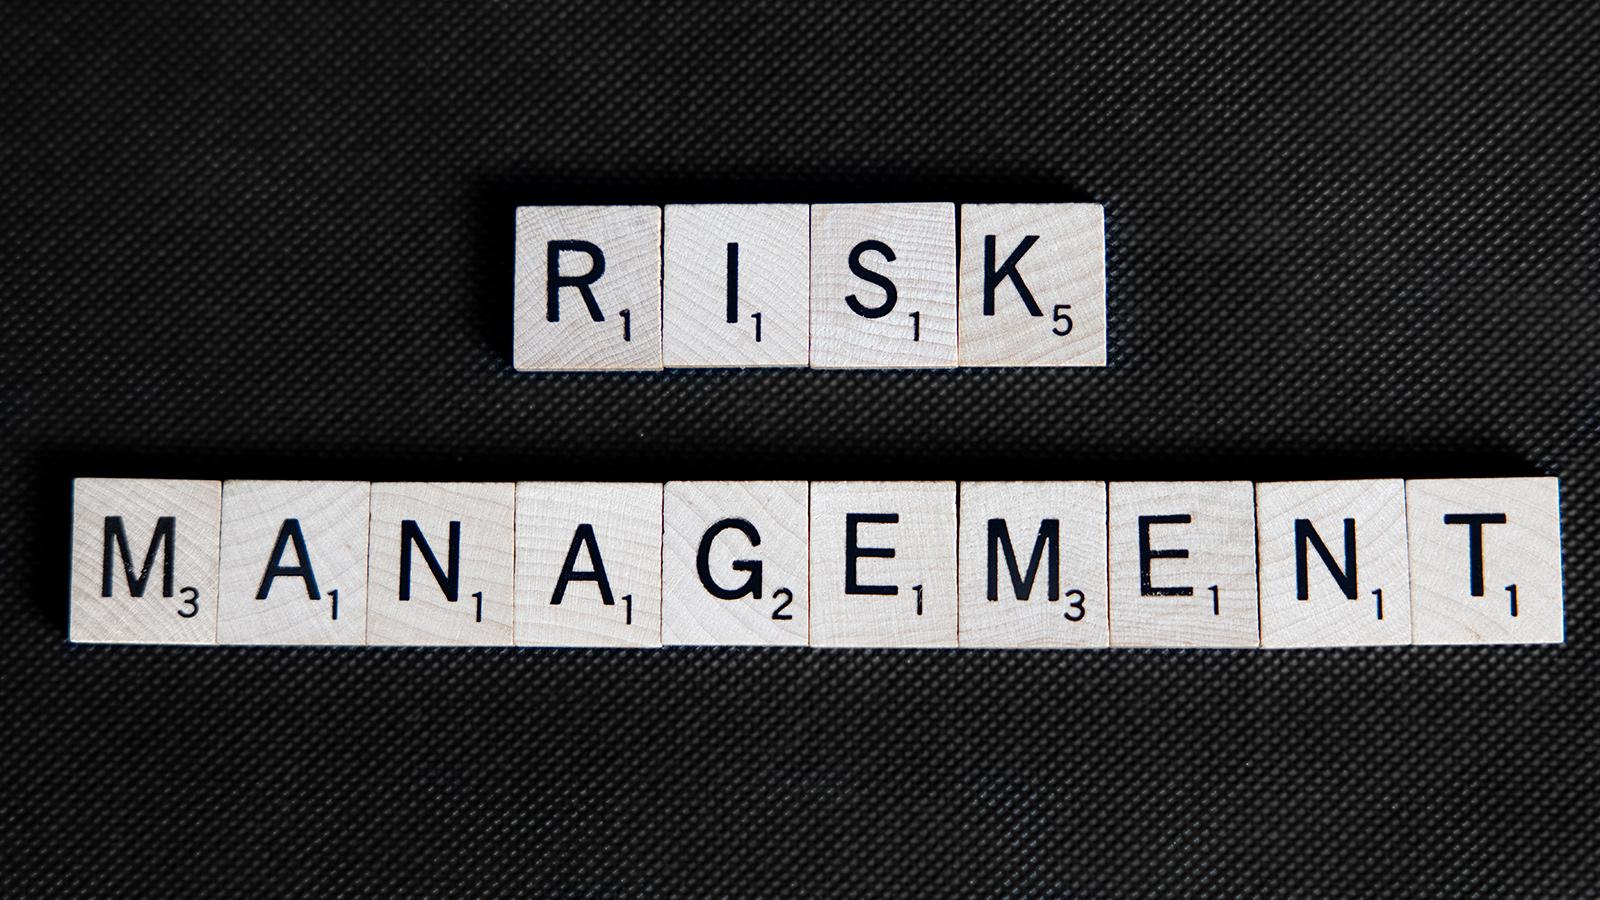 Scrabble letters spelling out Risk Management